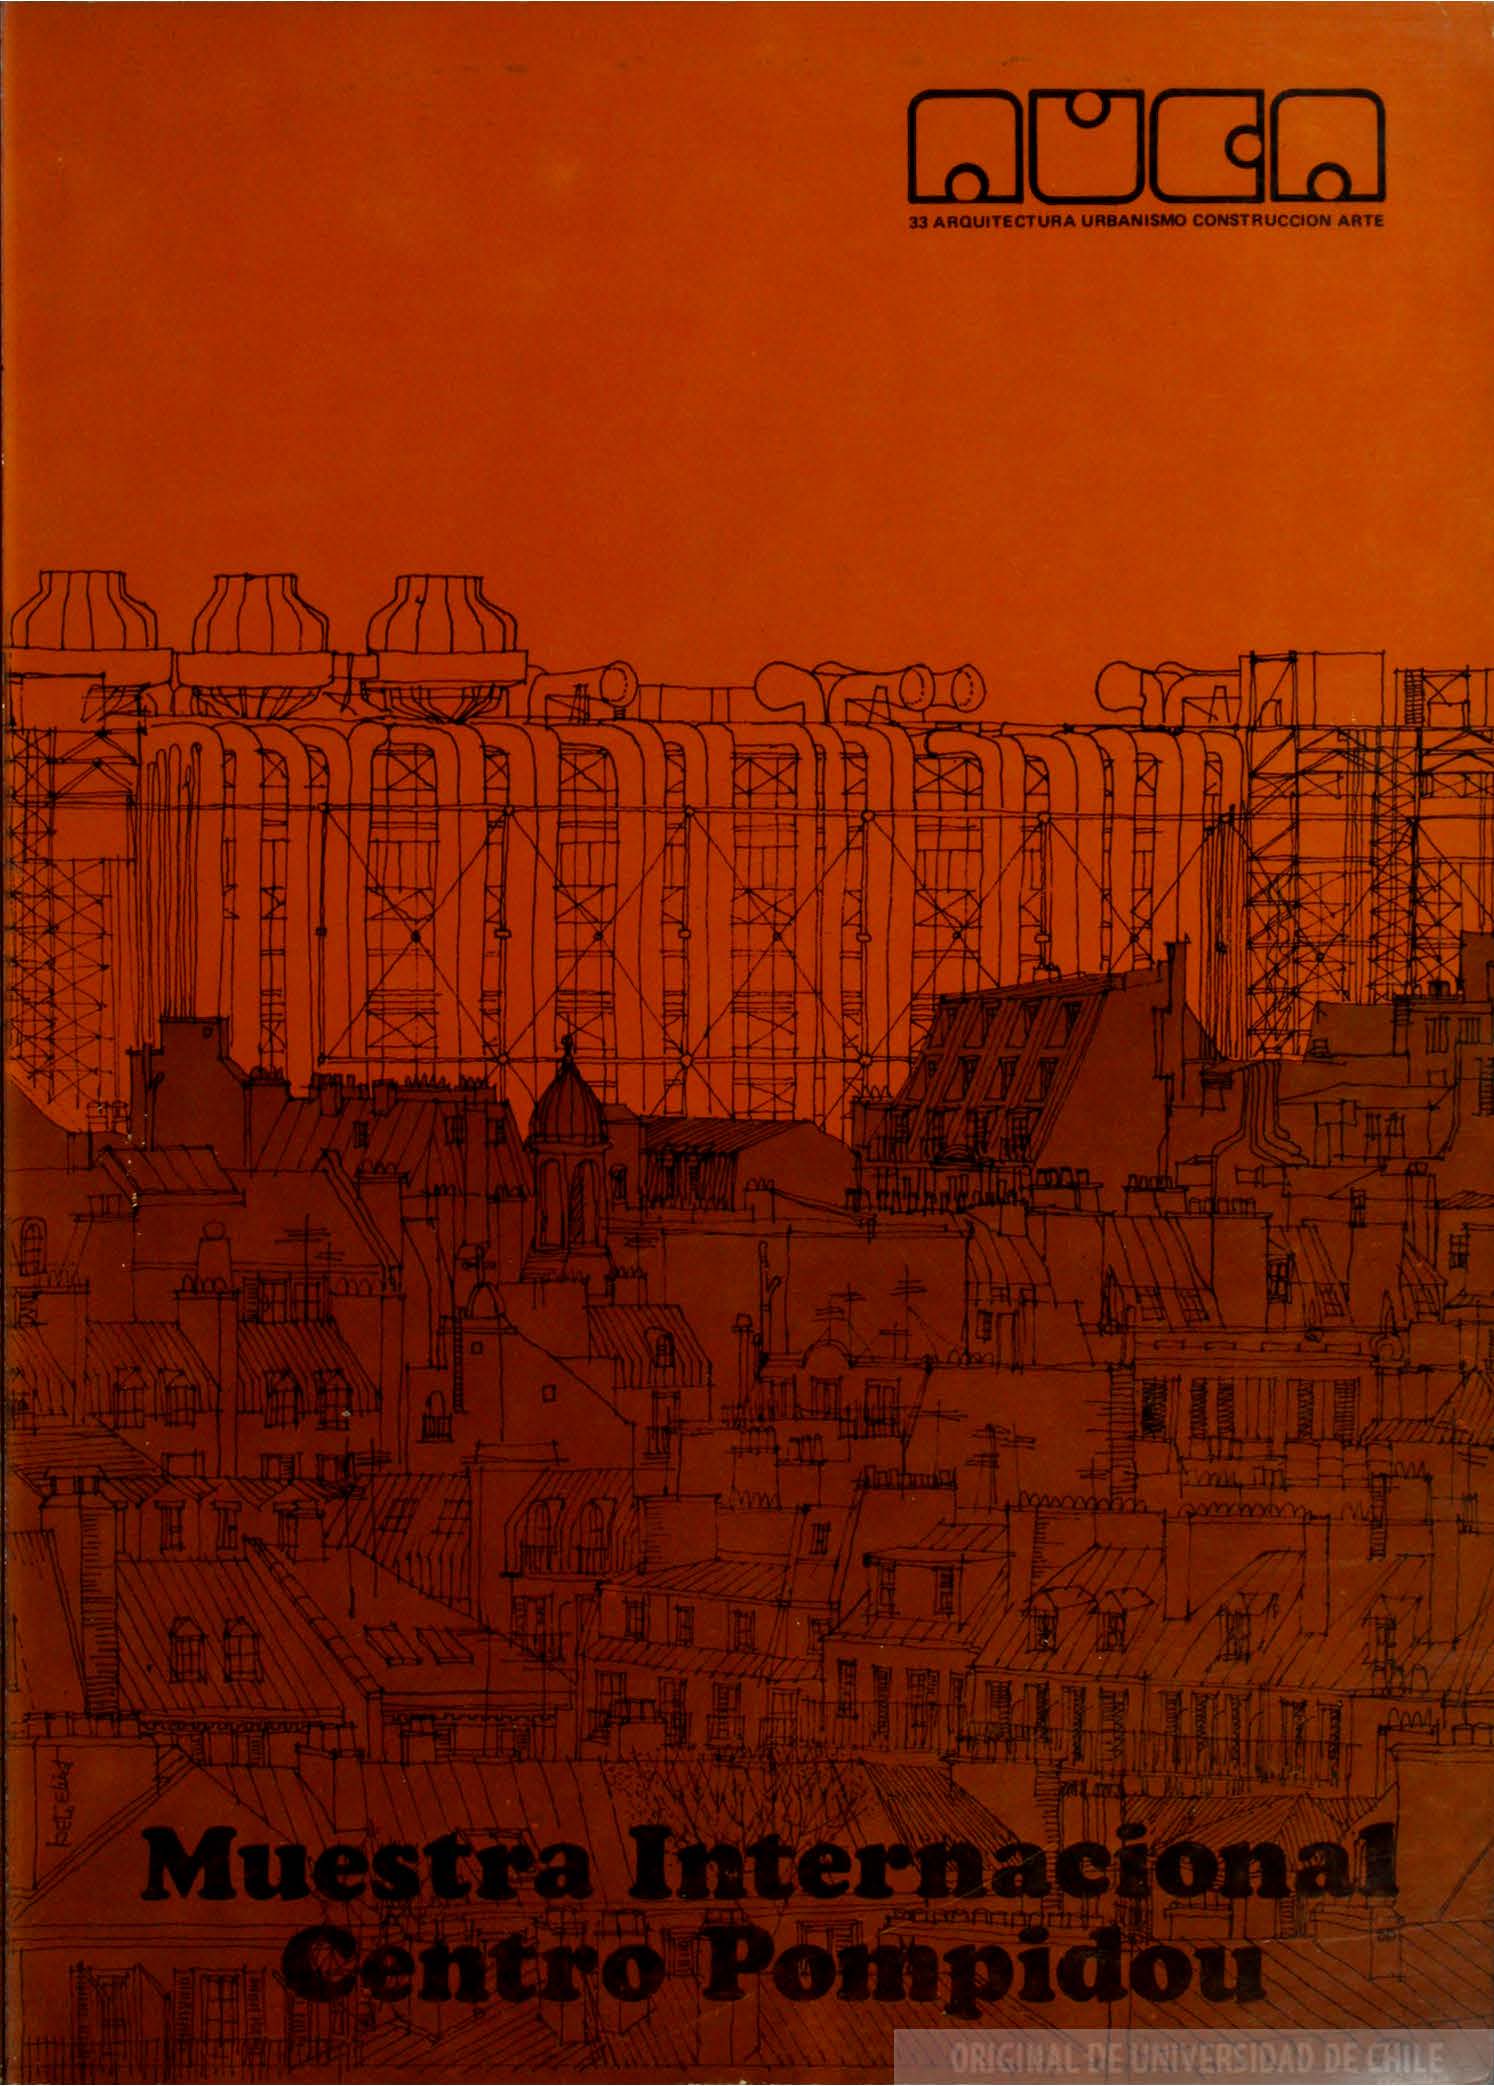 											Ver Núm. 33 (1977): Muestra Internacional
										